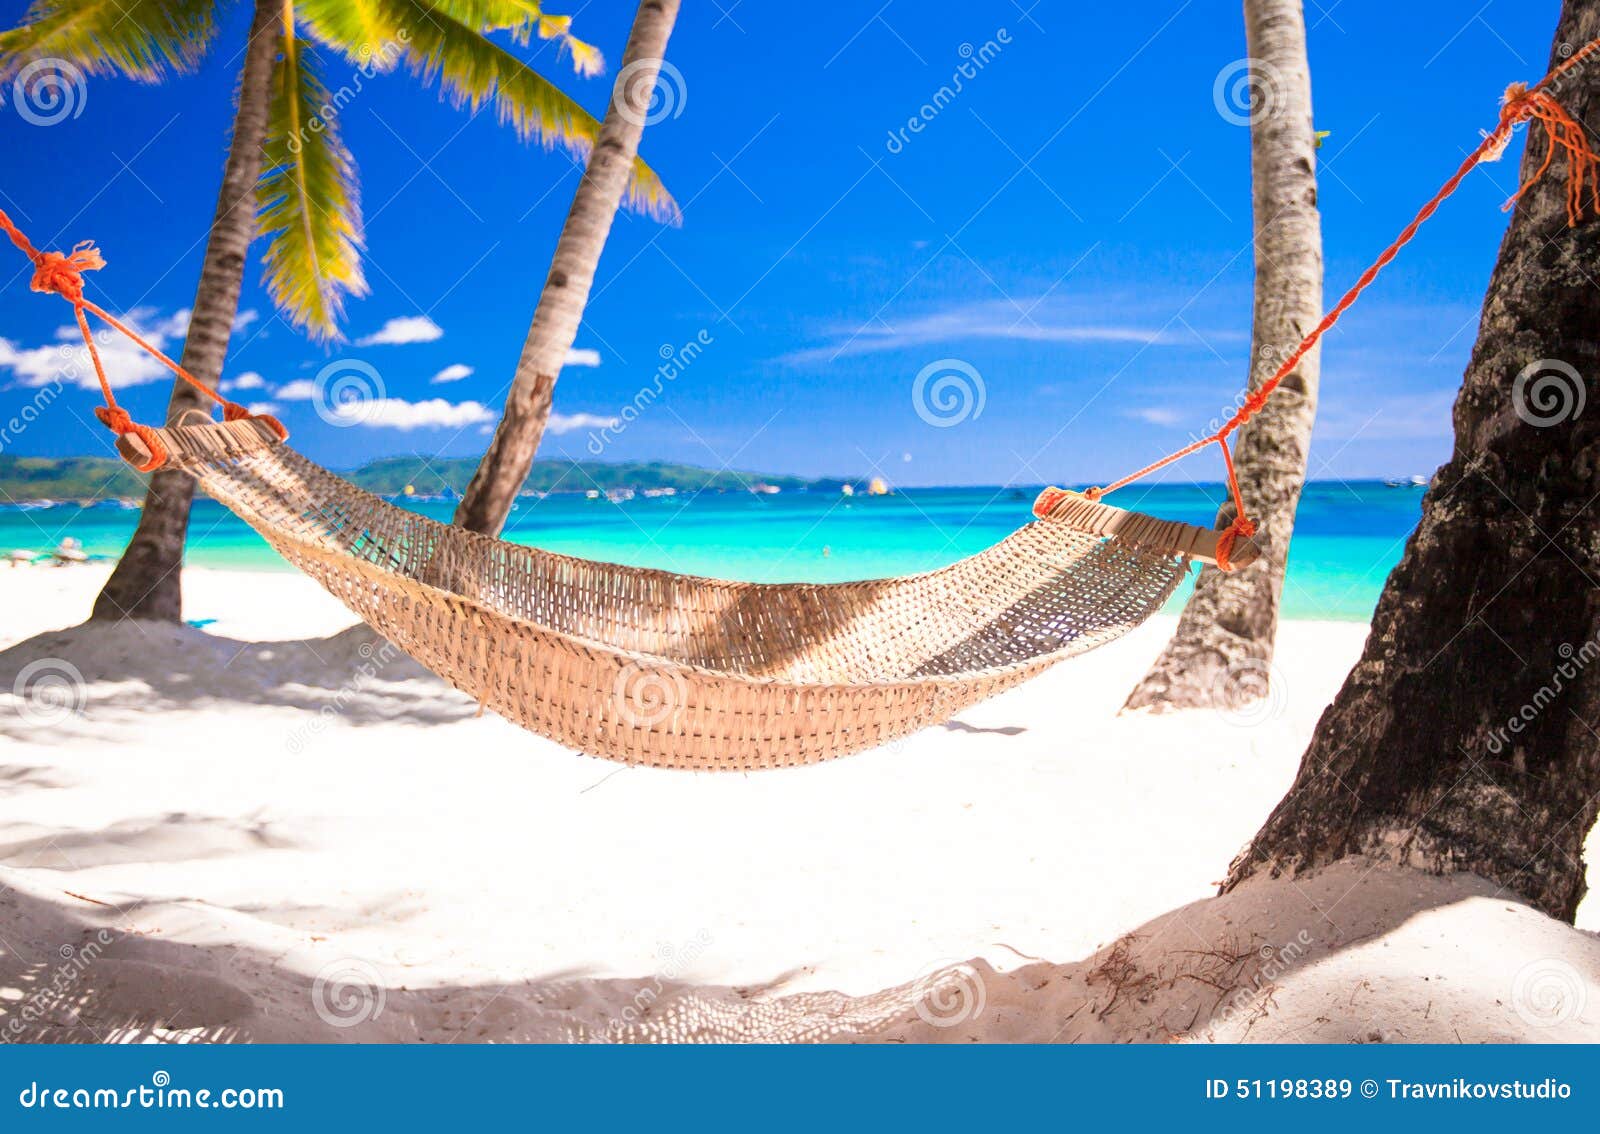 Straw Hammock on Tropical White Sandy Beach Stock Image - Image of 